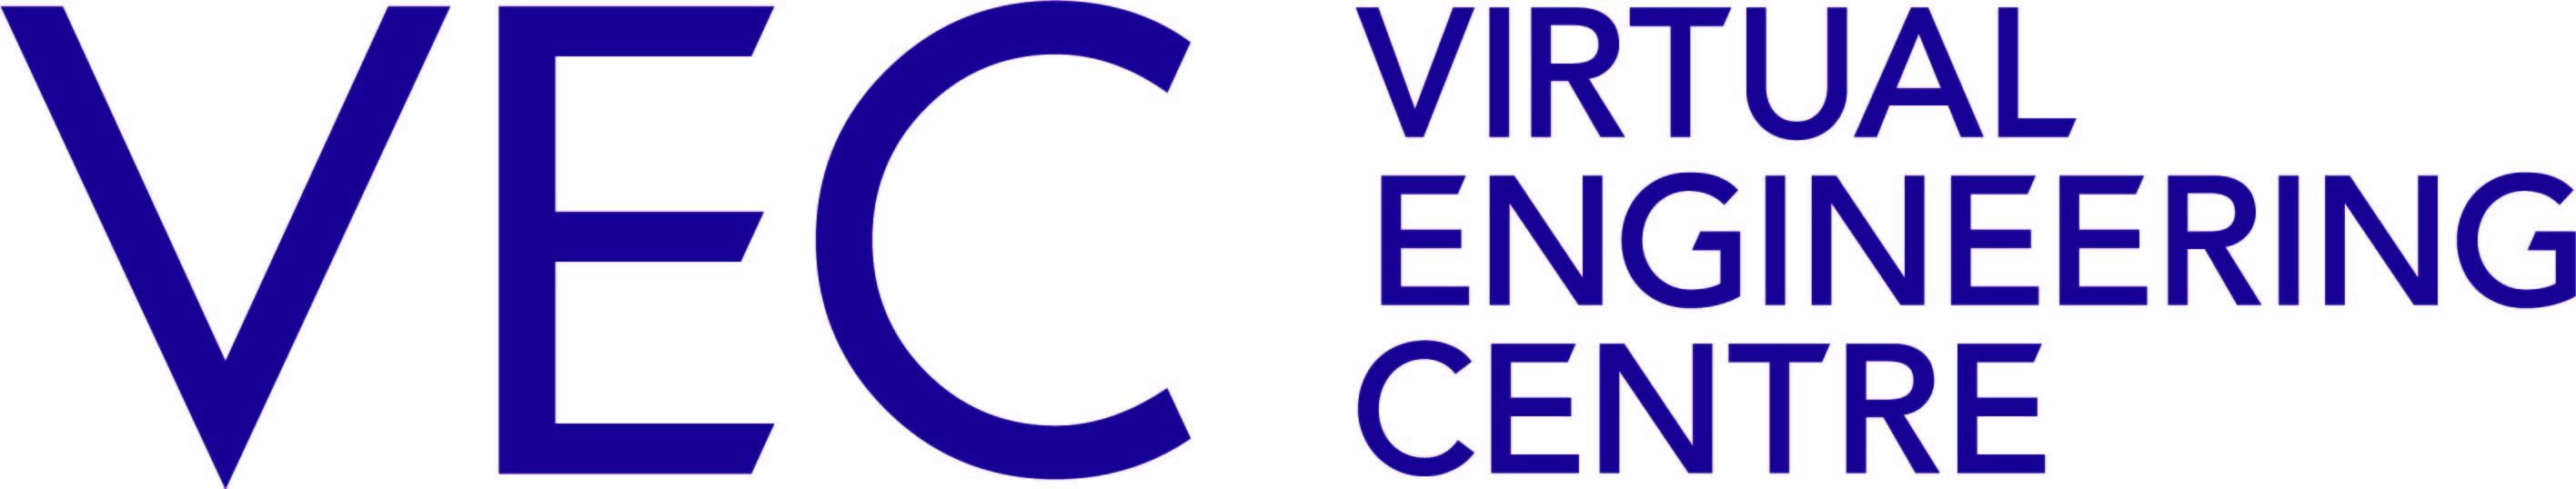 Virtual Engineering Centre (Logo)